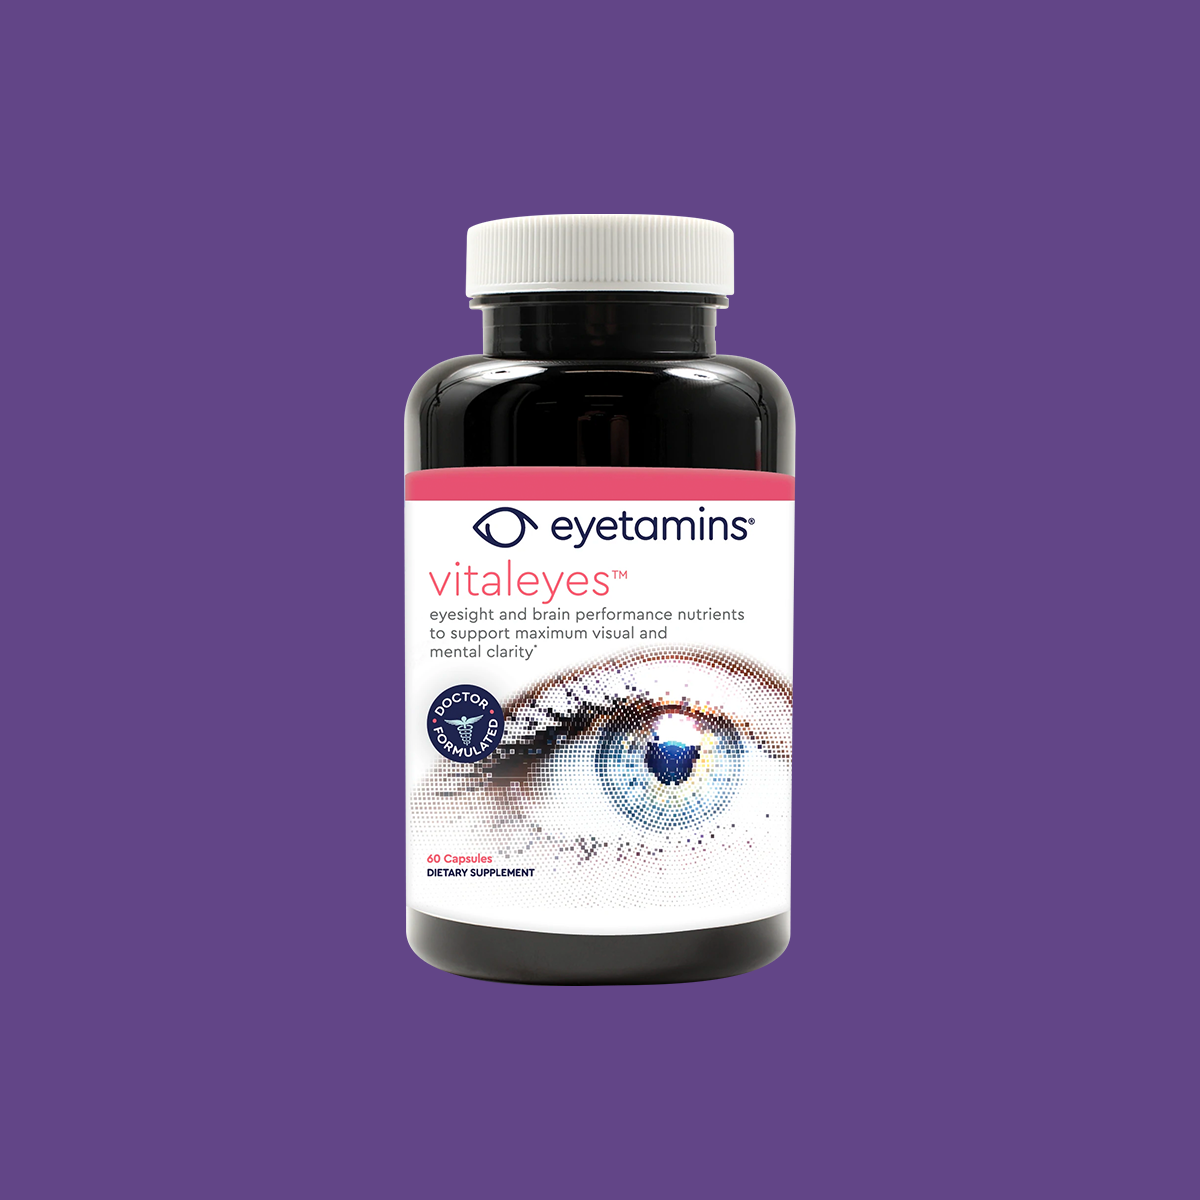 Eyetamins Vitaleyes Eye and Brain Health Supplement - 60 Capsules